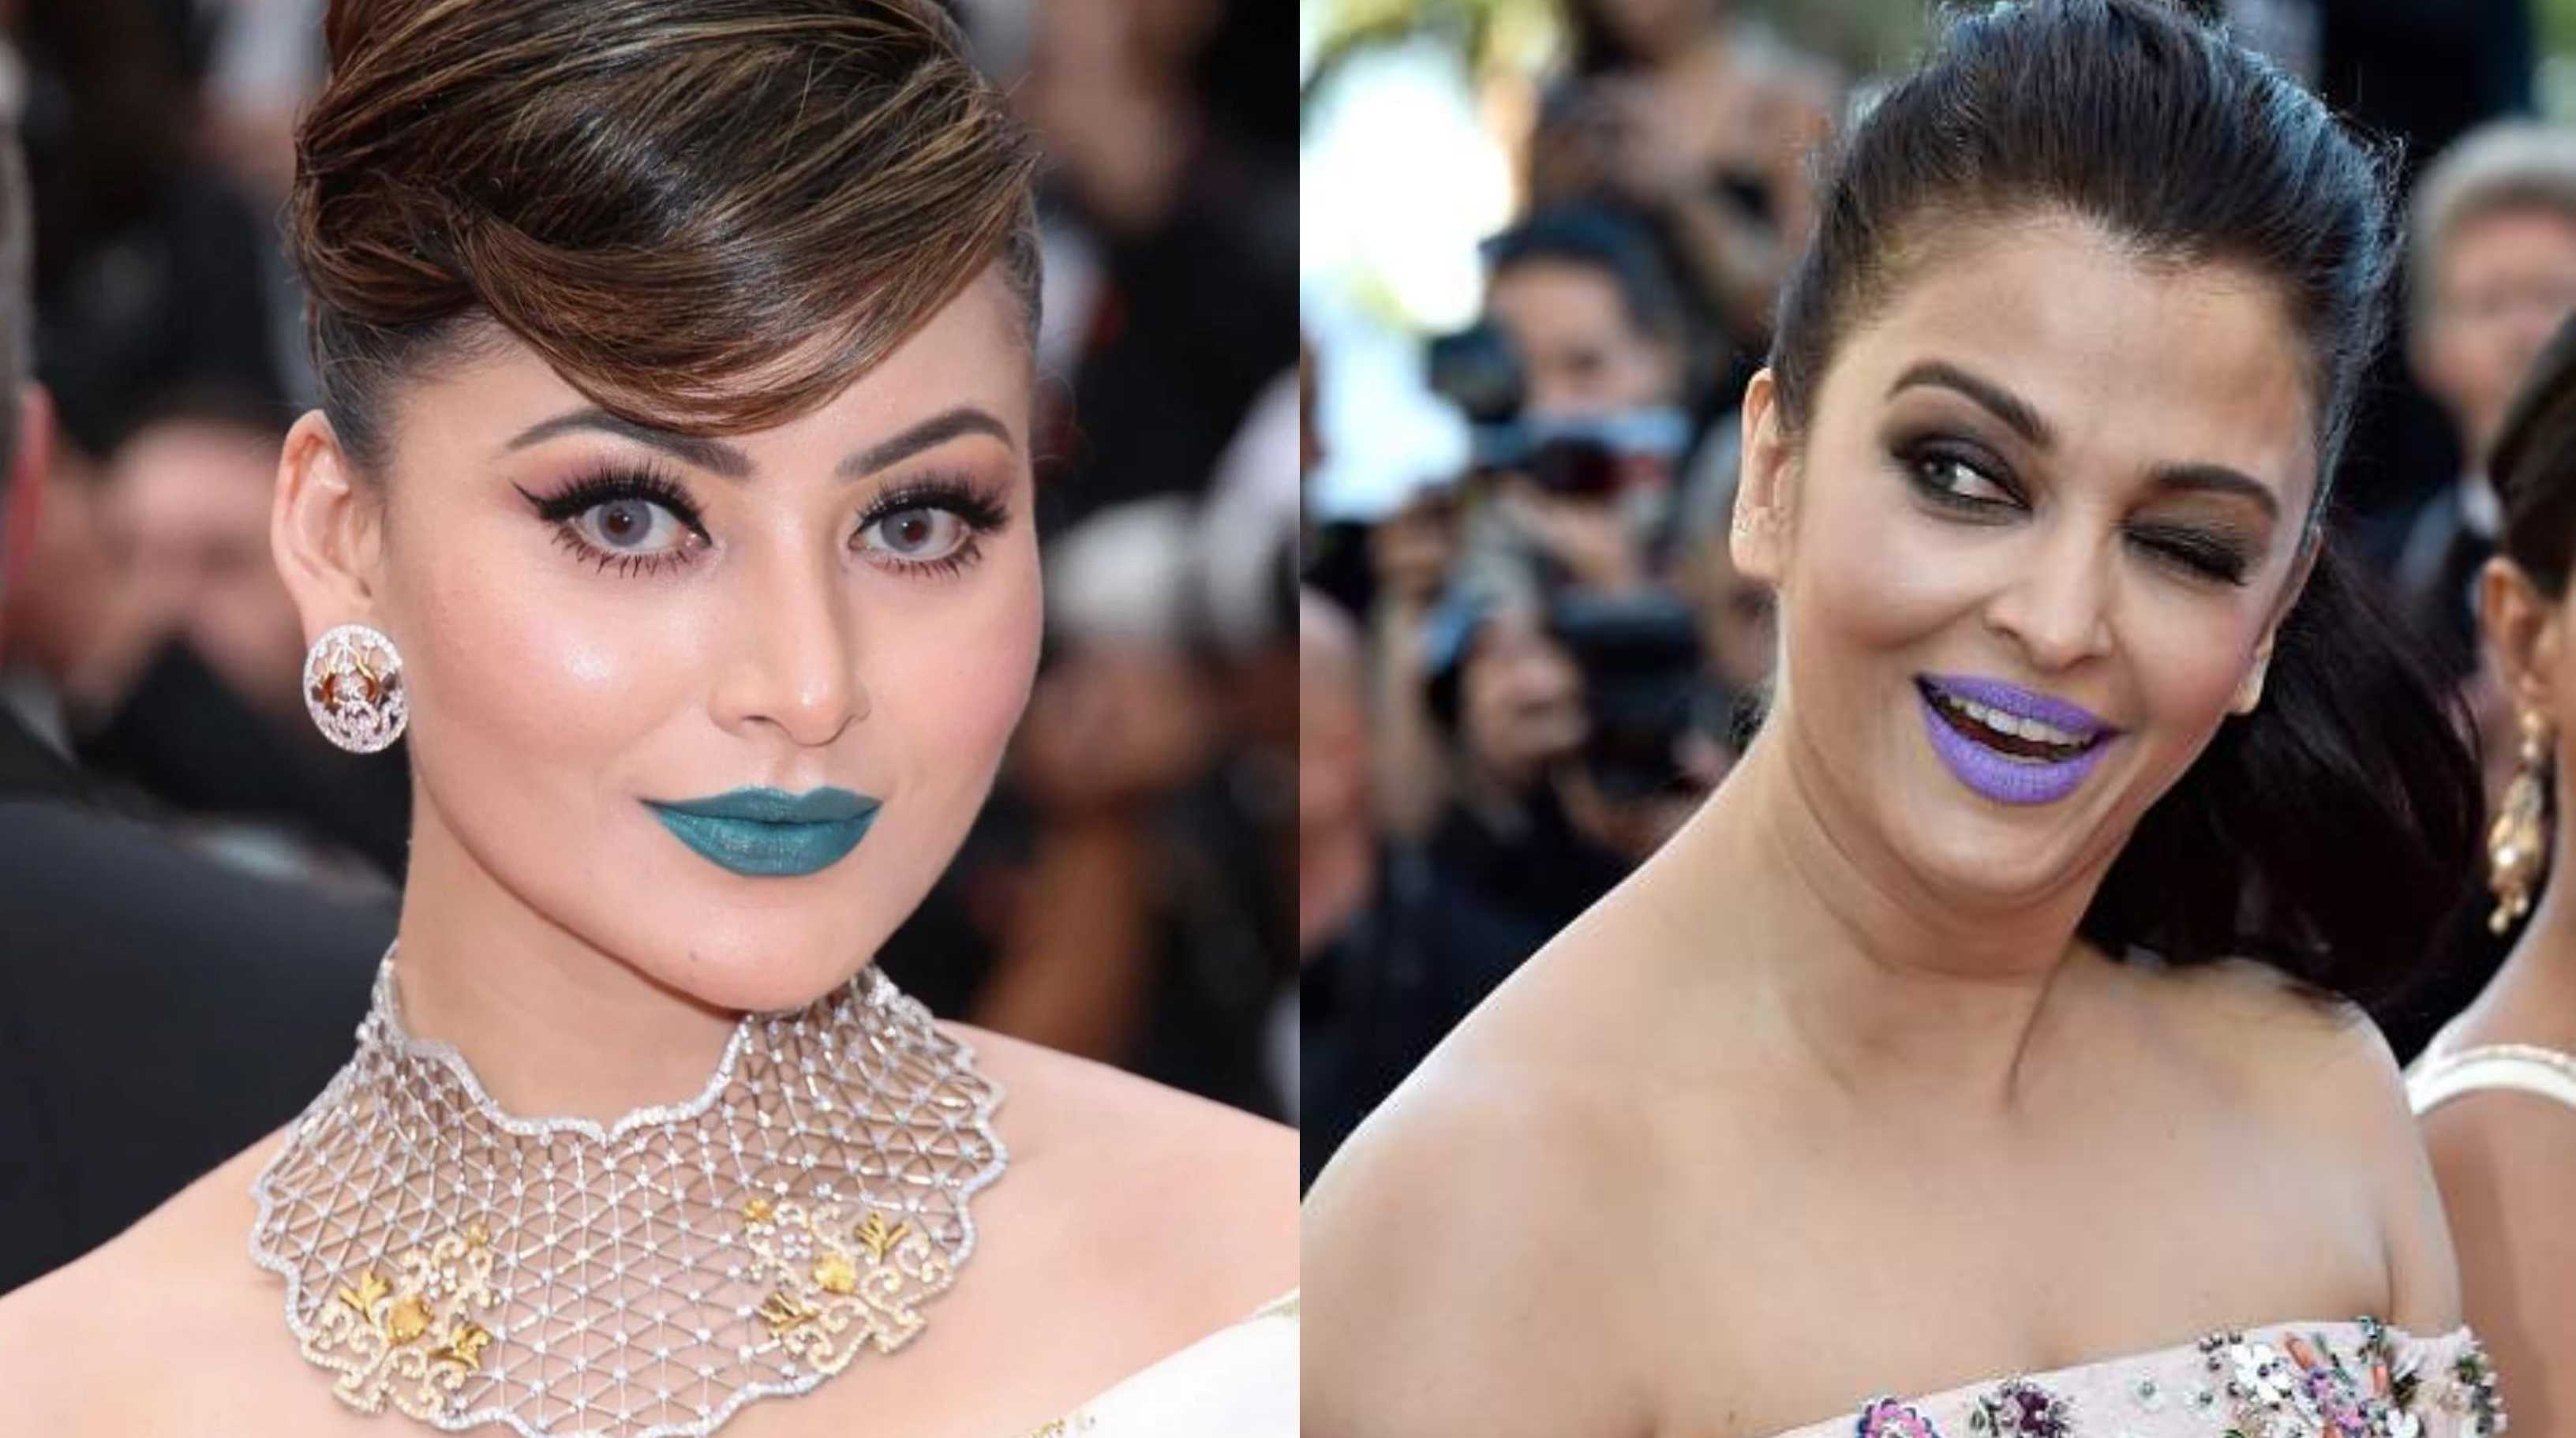 ‘Konsa gola chusa hai’: After Aishwarya’s purple pout, Urvashi Rautela wears blue lipstick to Cannes; netizens react